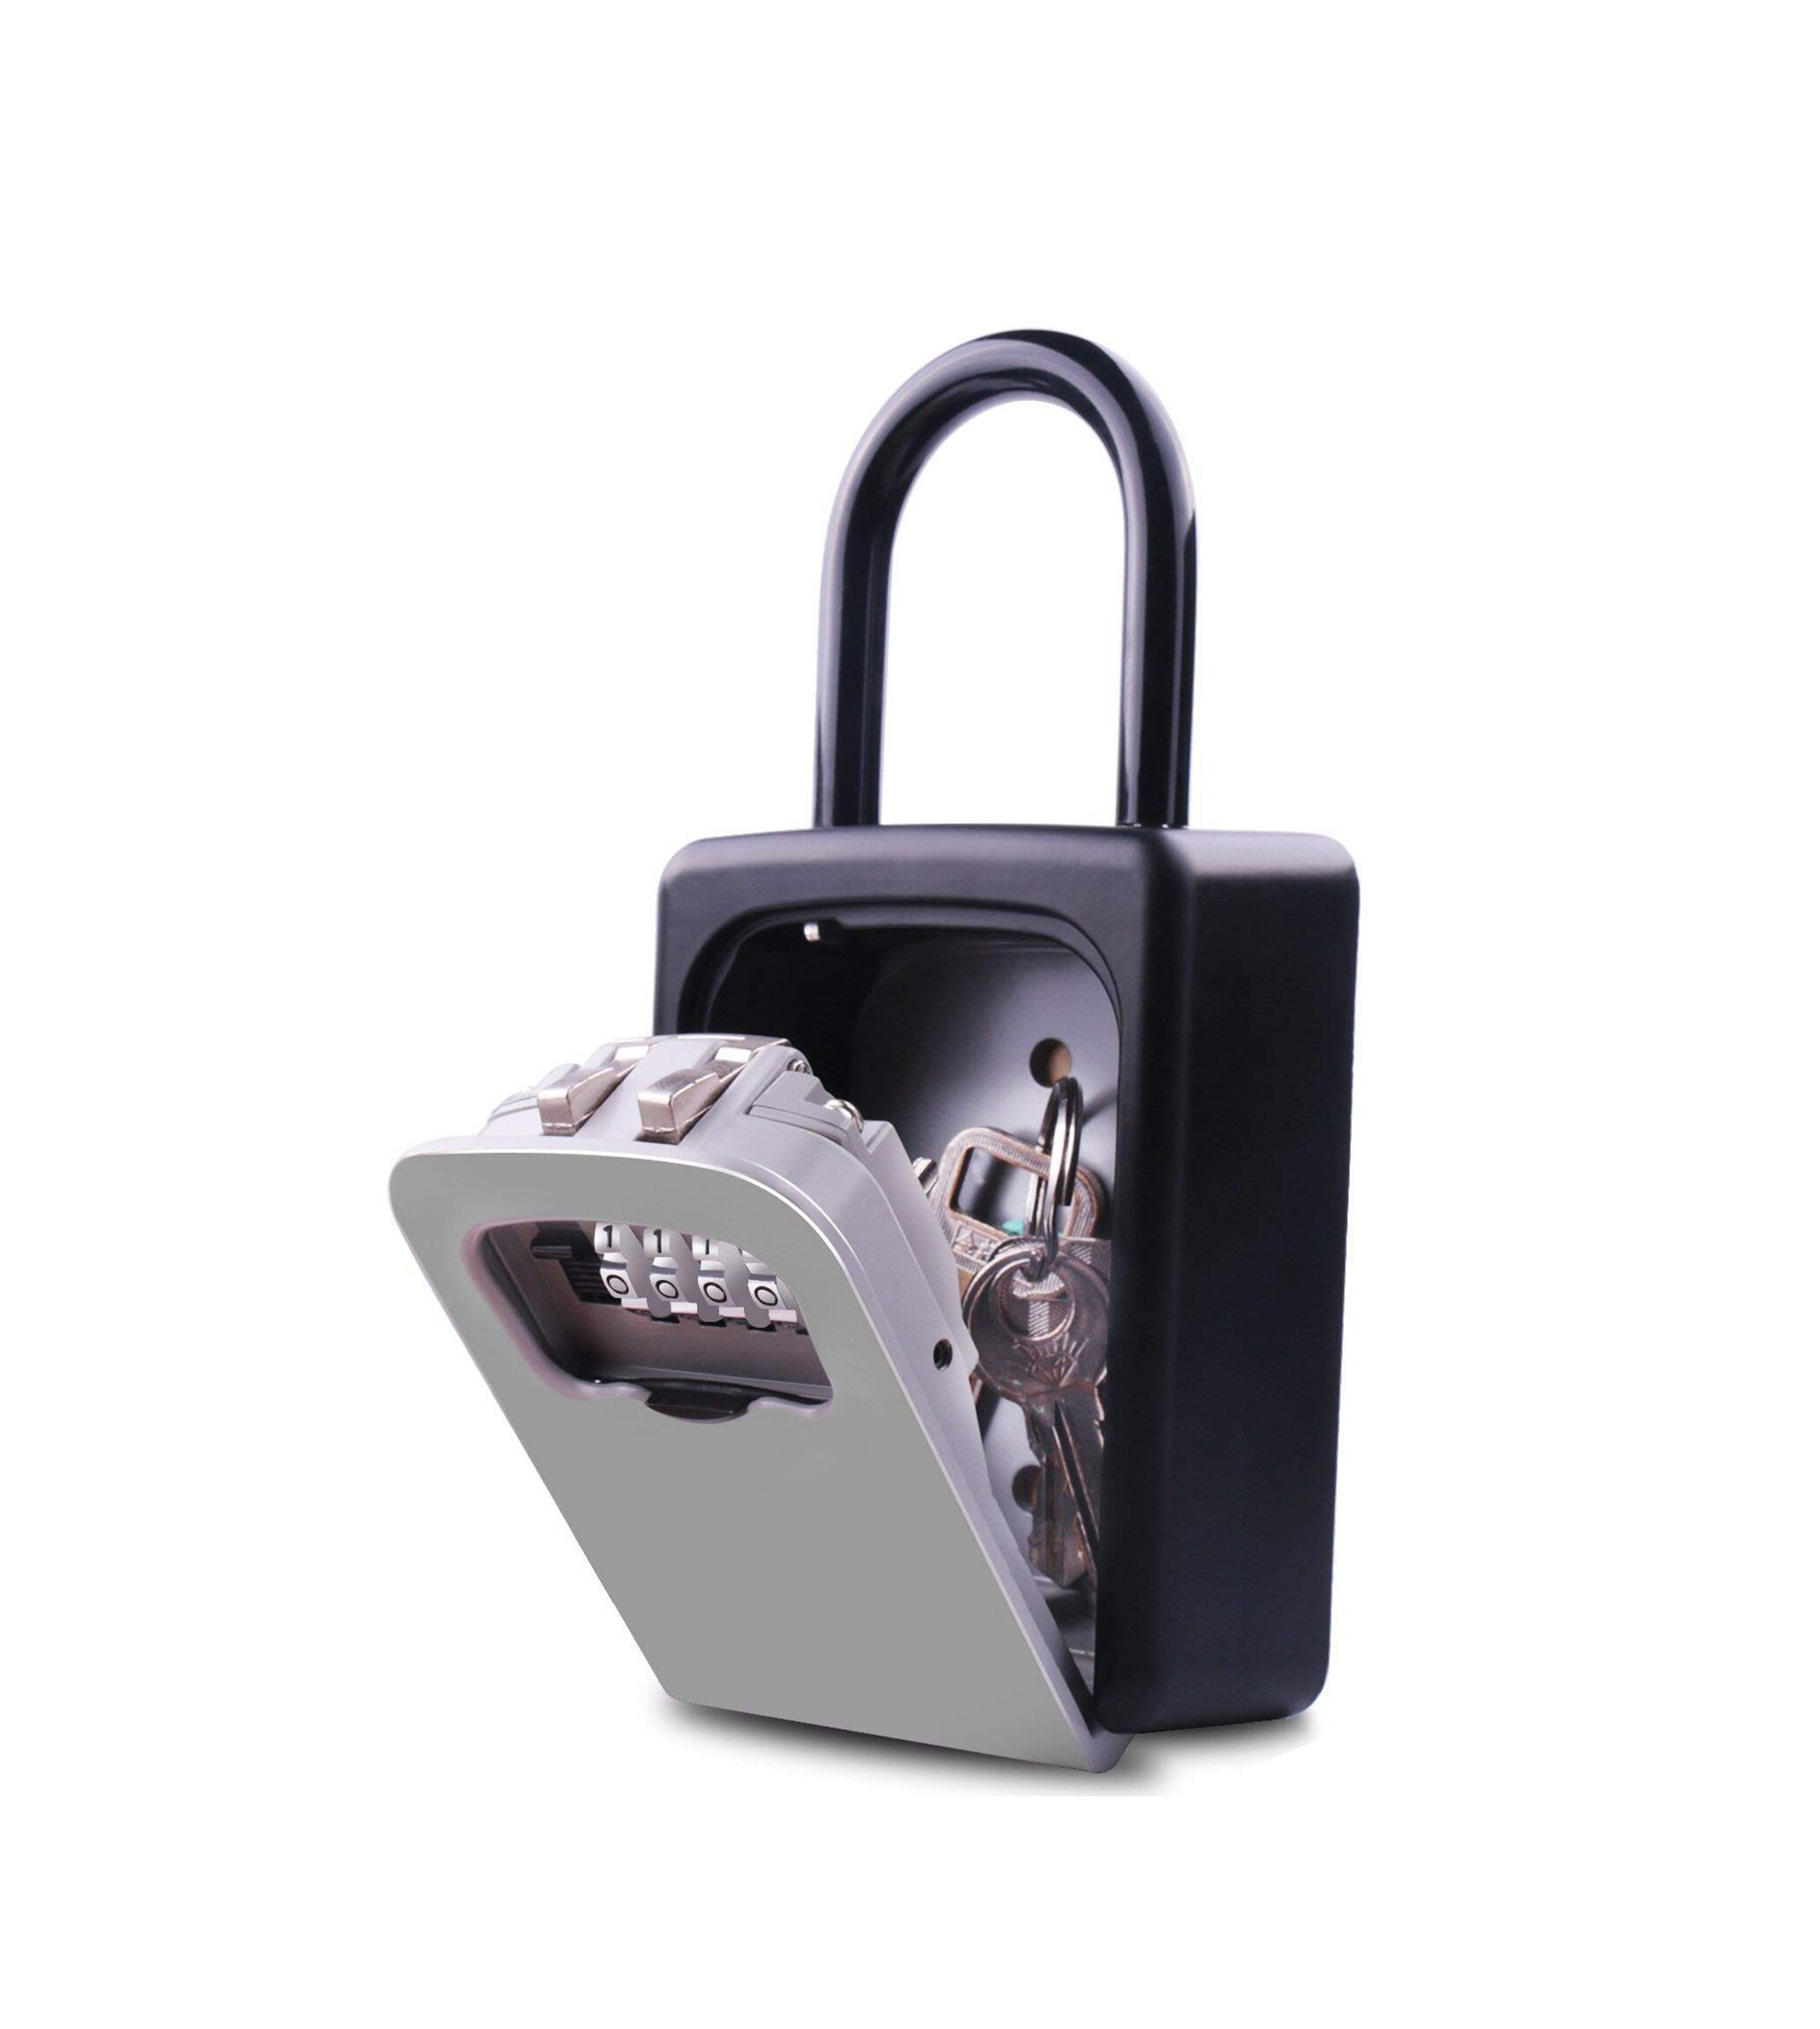 3pcs portable copper locks for tavel luggage home drawer box lock cute 22mm lock